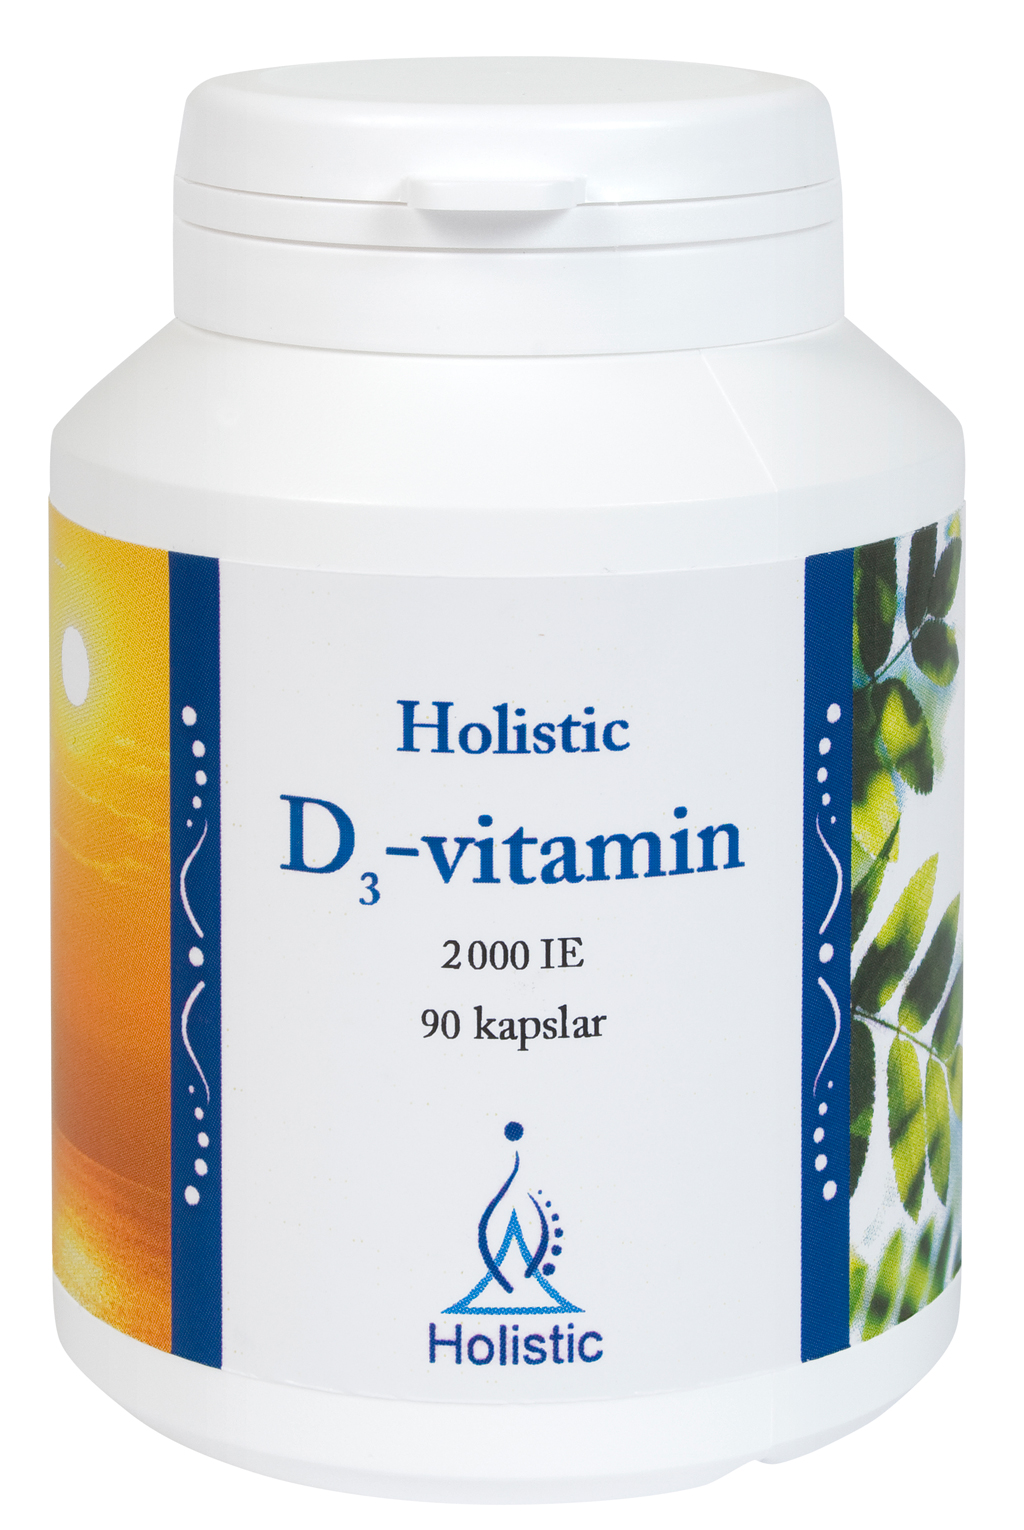 D-vitamin-highres